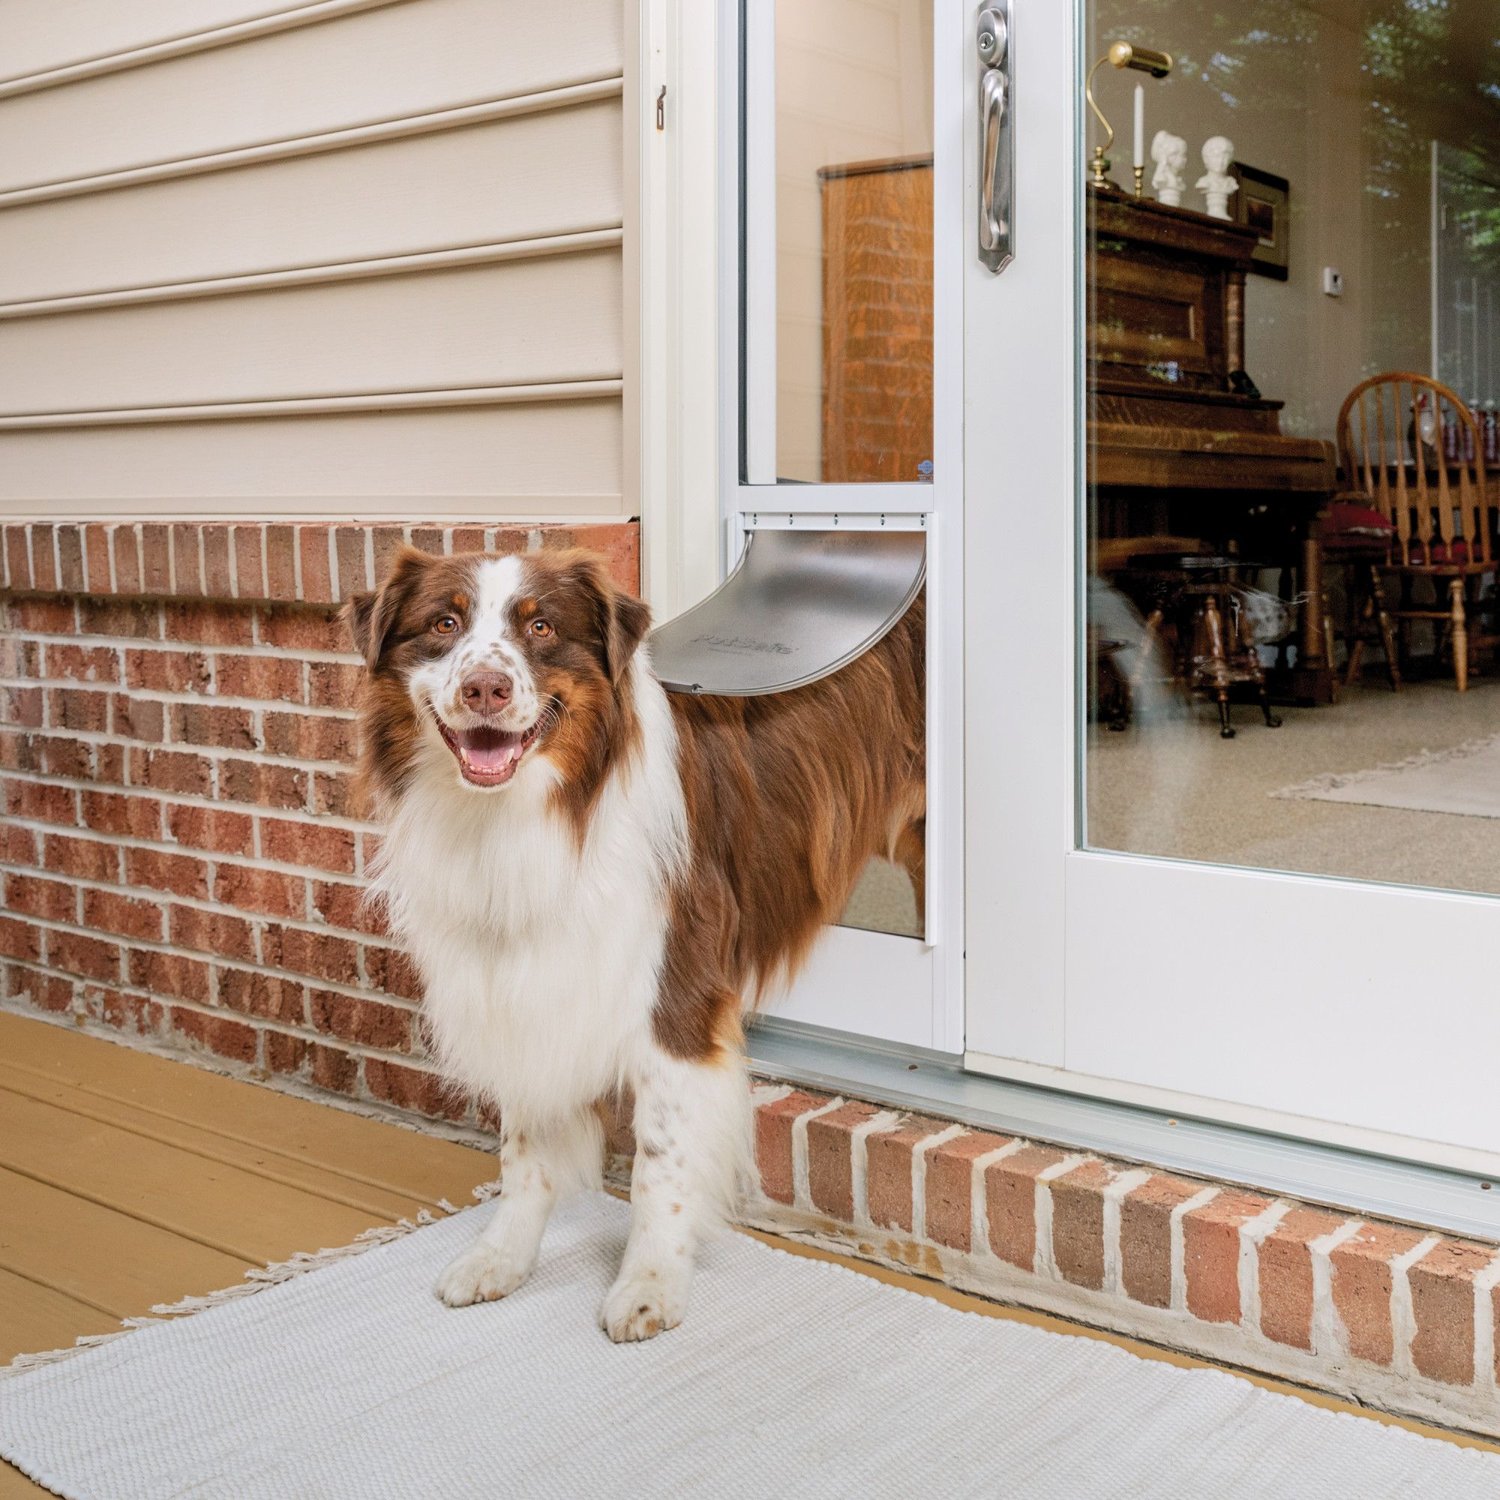 Utah Pet Access - Sliding Glass Dog Door